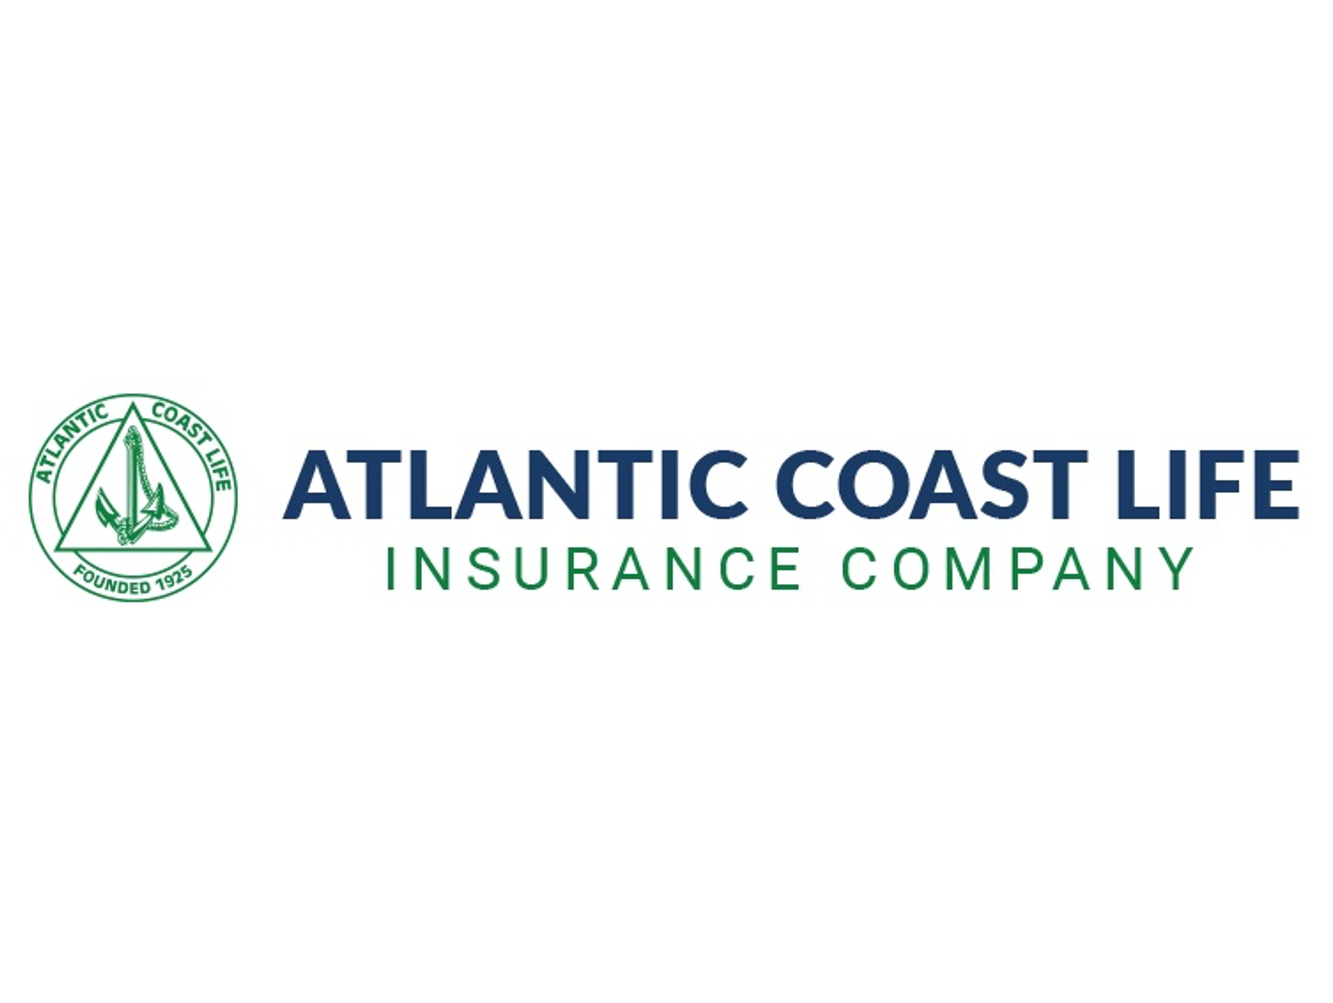 Atlantic Coast Life Insurance